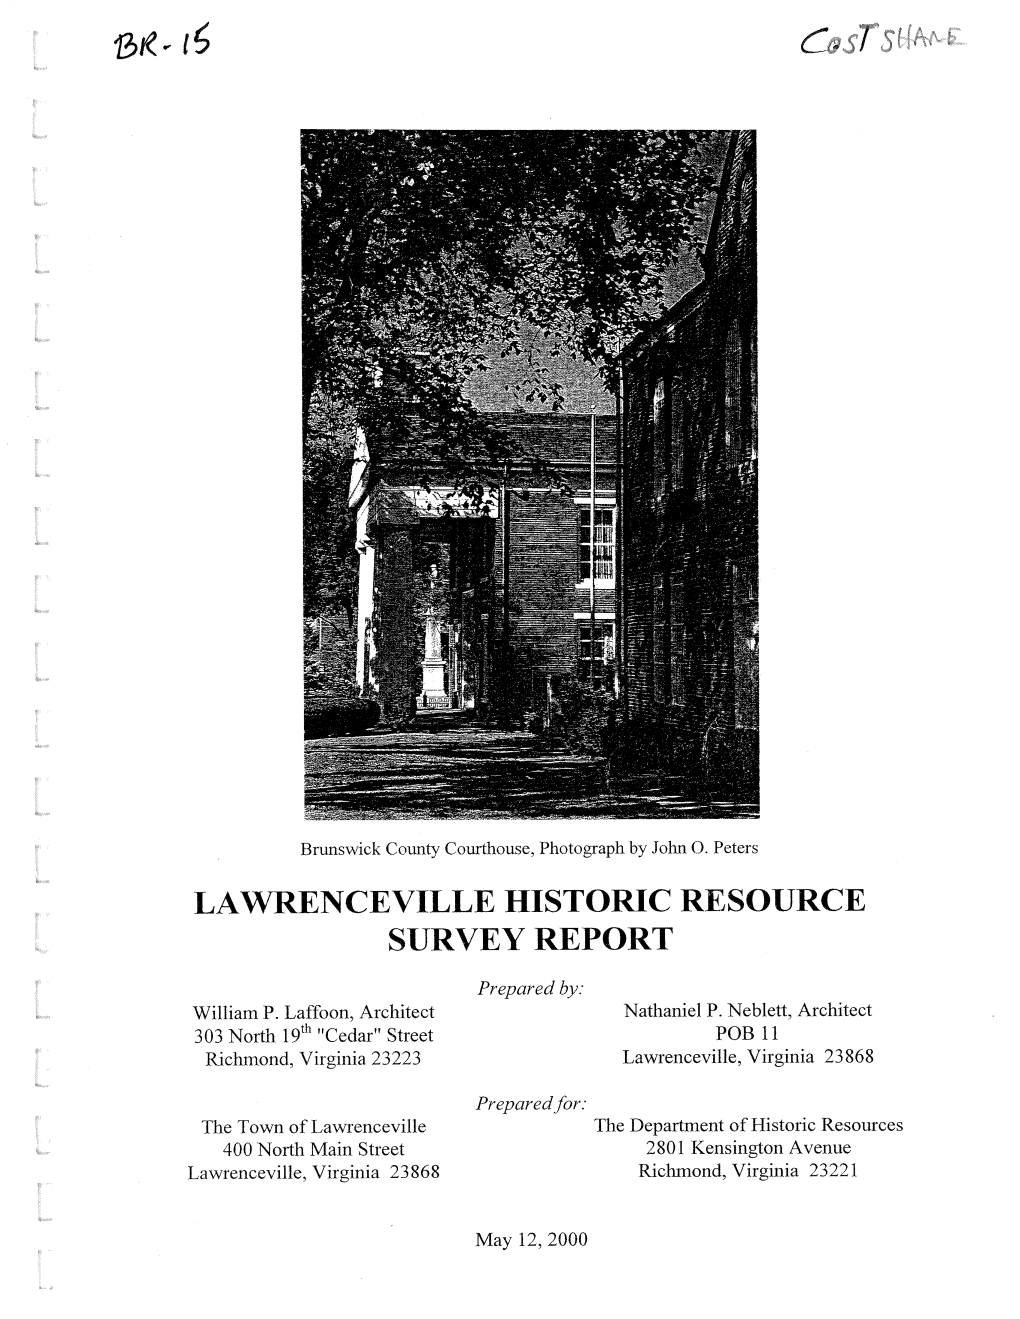 Lawrenceville Historic Resource Survey Report